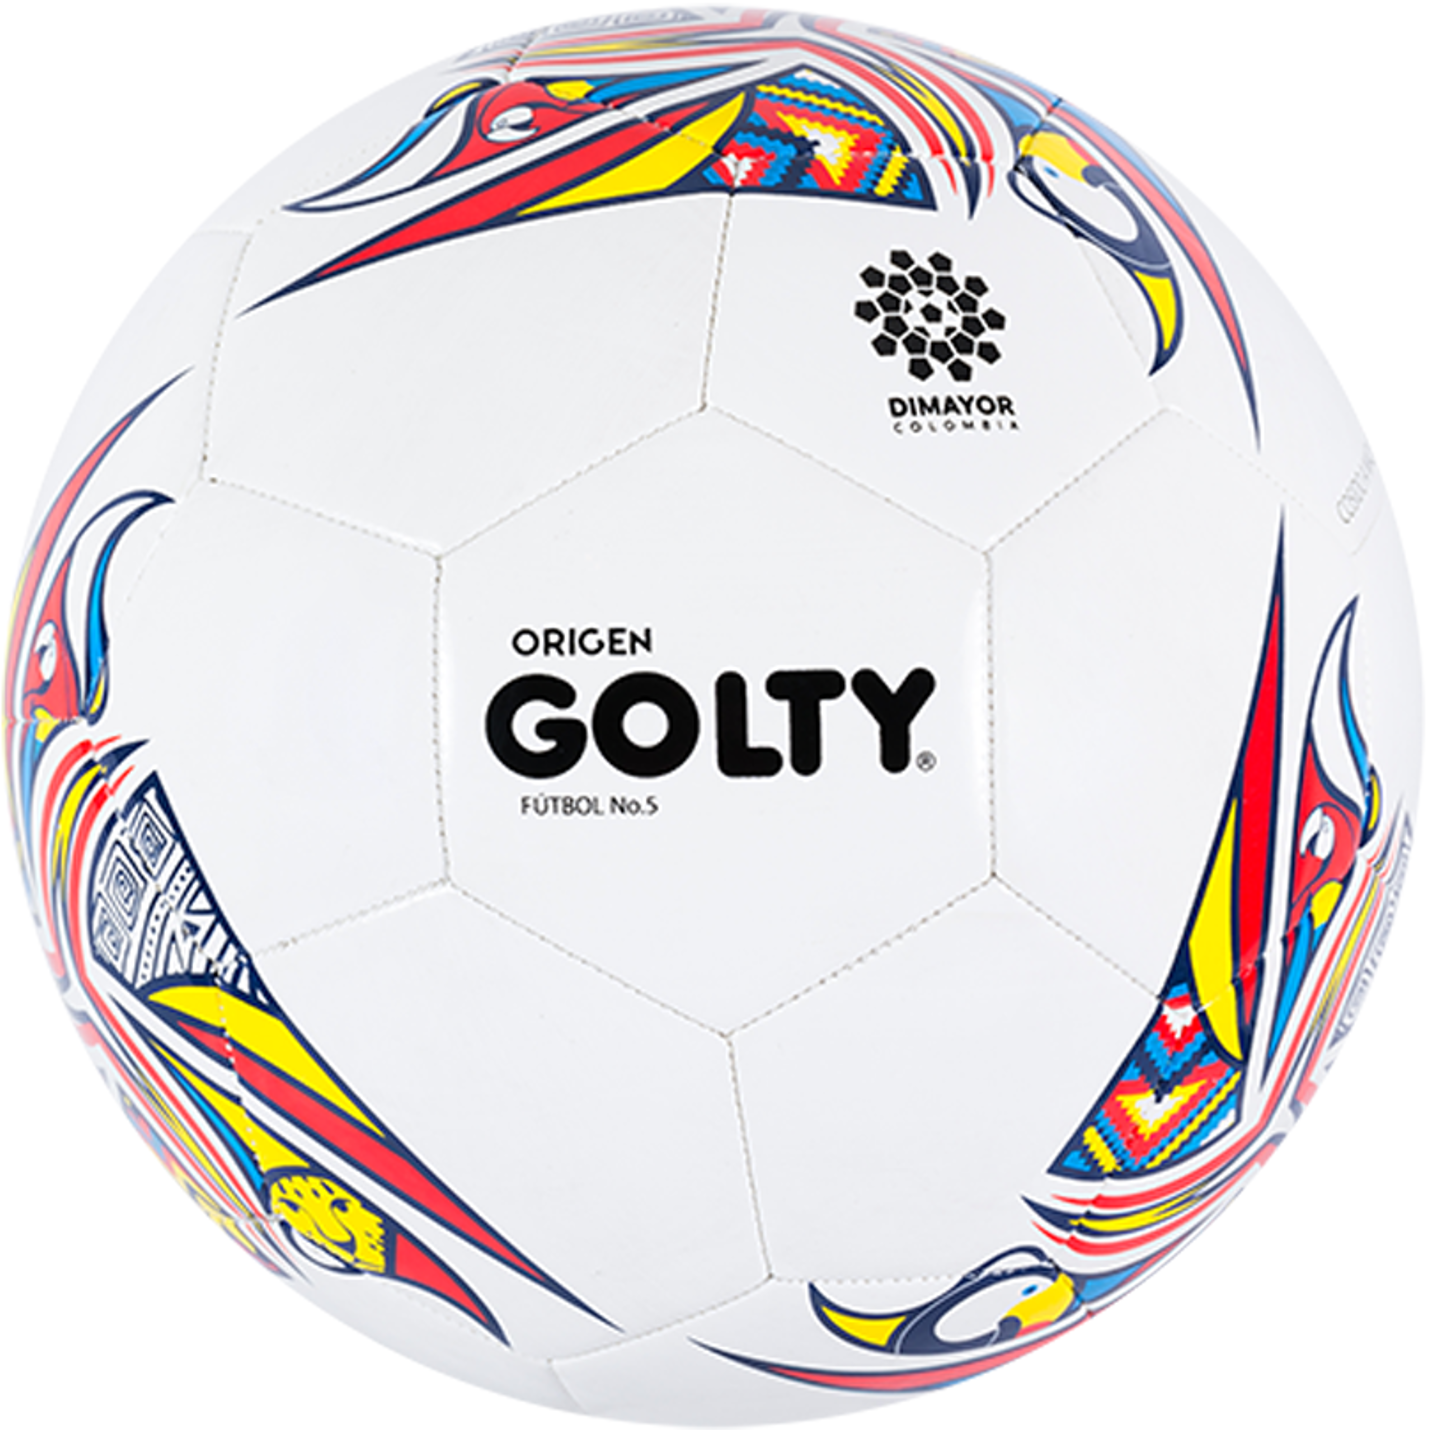 Balon de Futbol Golty Origen Recreativo N.5